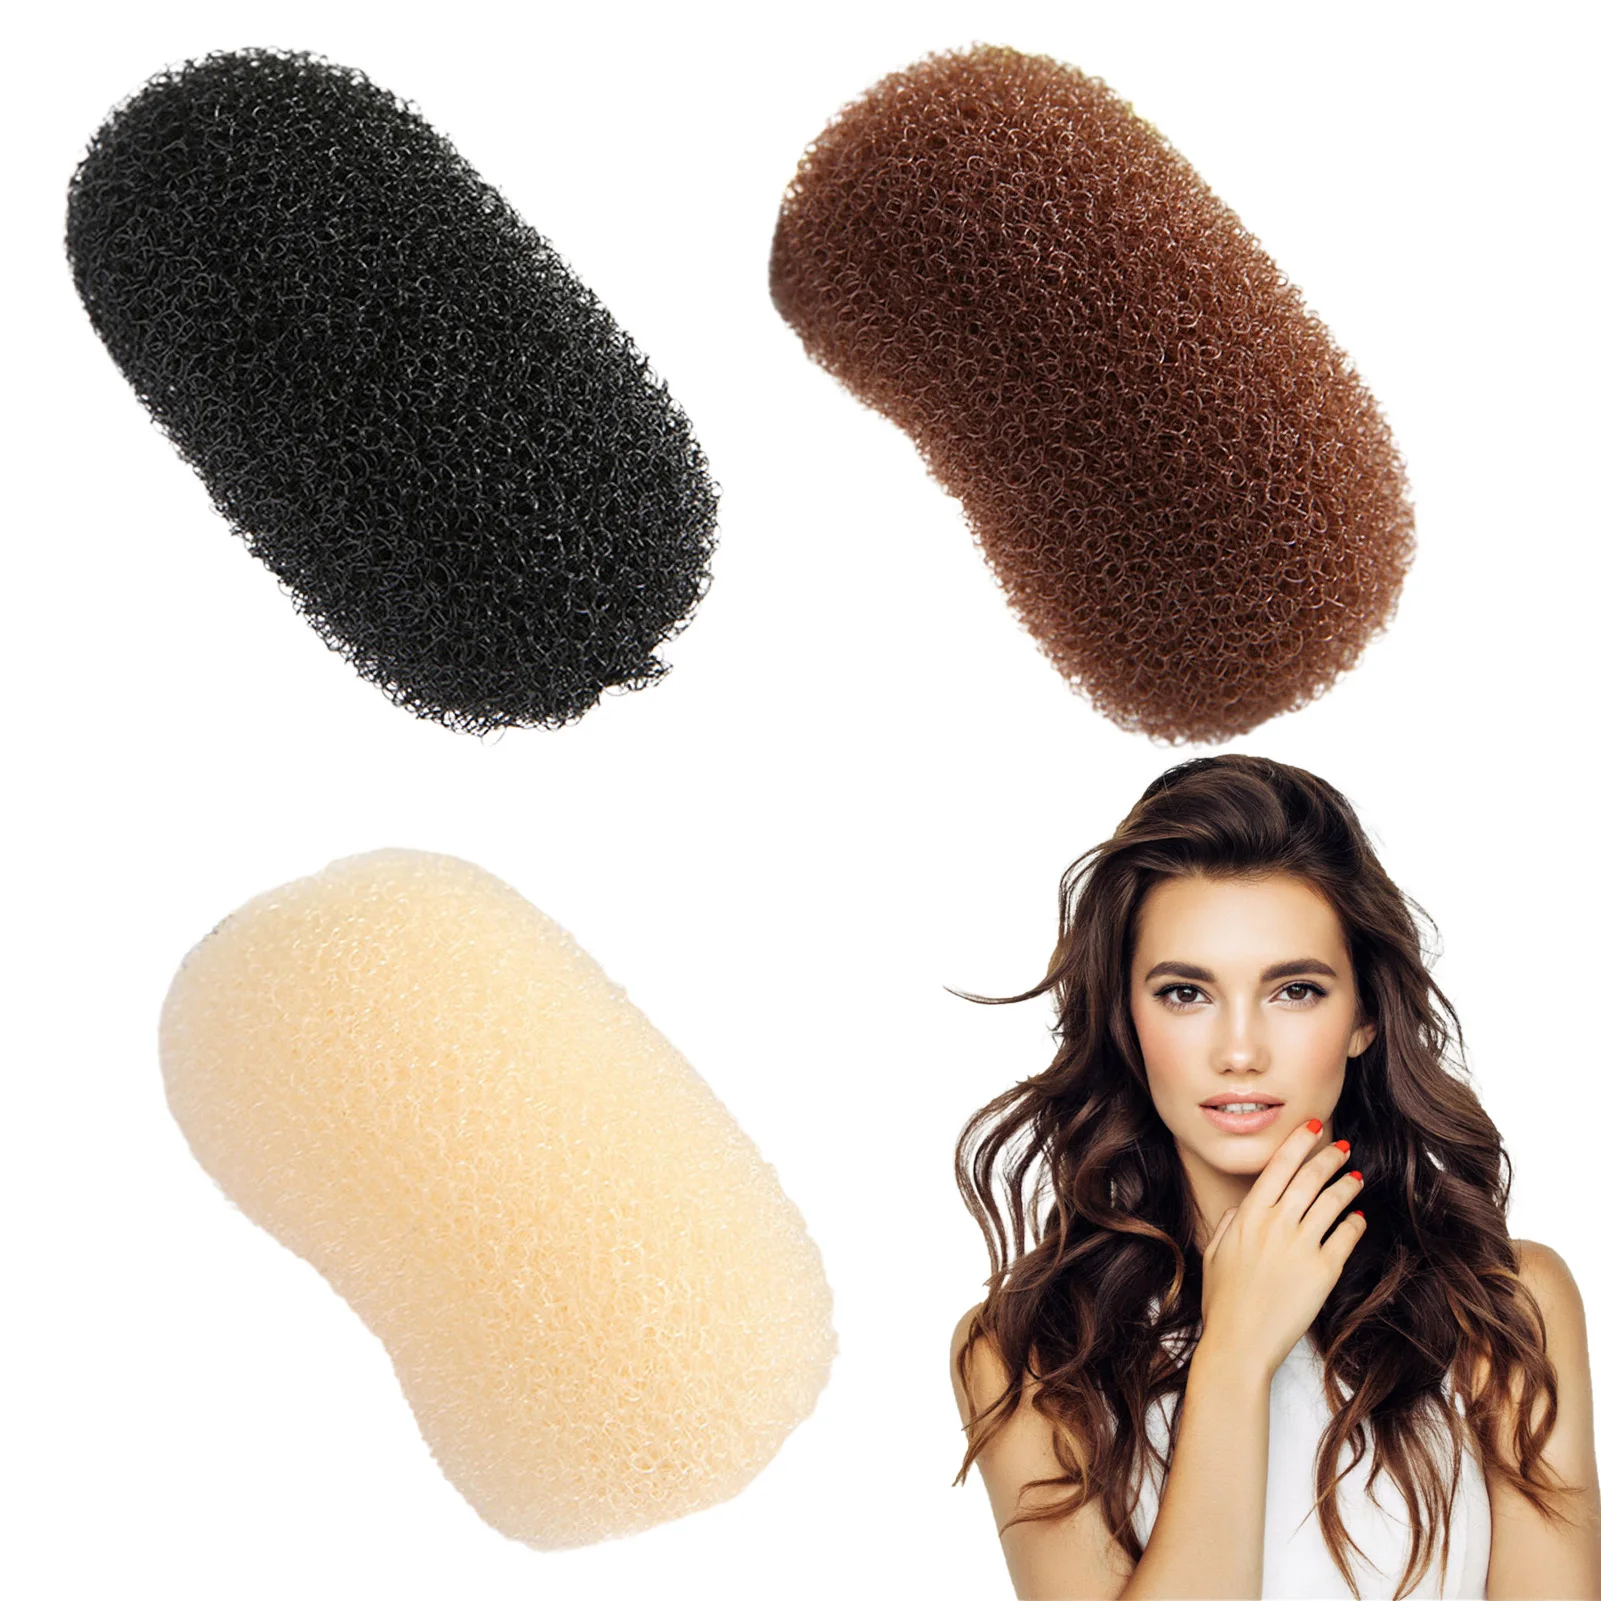 

Hair Base Bump Up Sponge Hair Volume Increase Puff Magic Hair Bun Maker Great Hair Tools Easy to Use Hair Beauty Styling Pad for